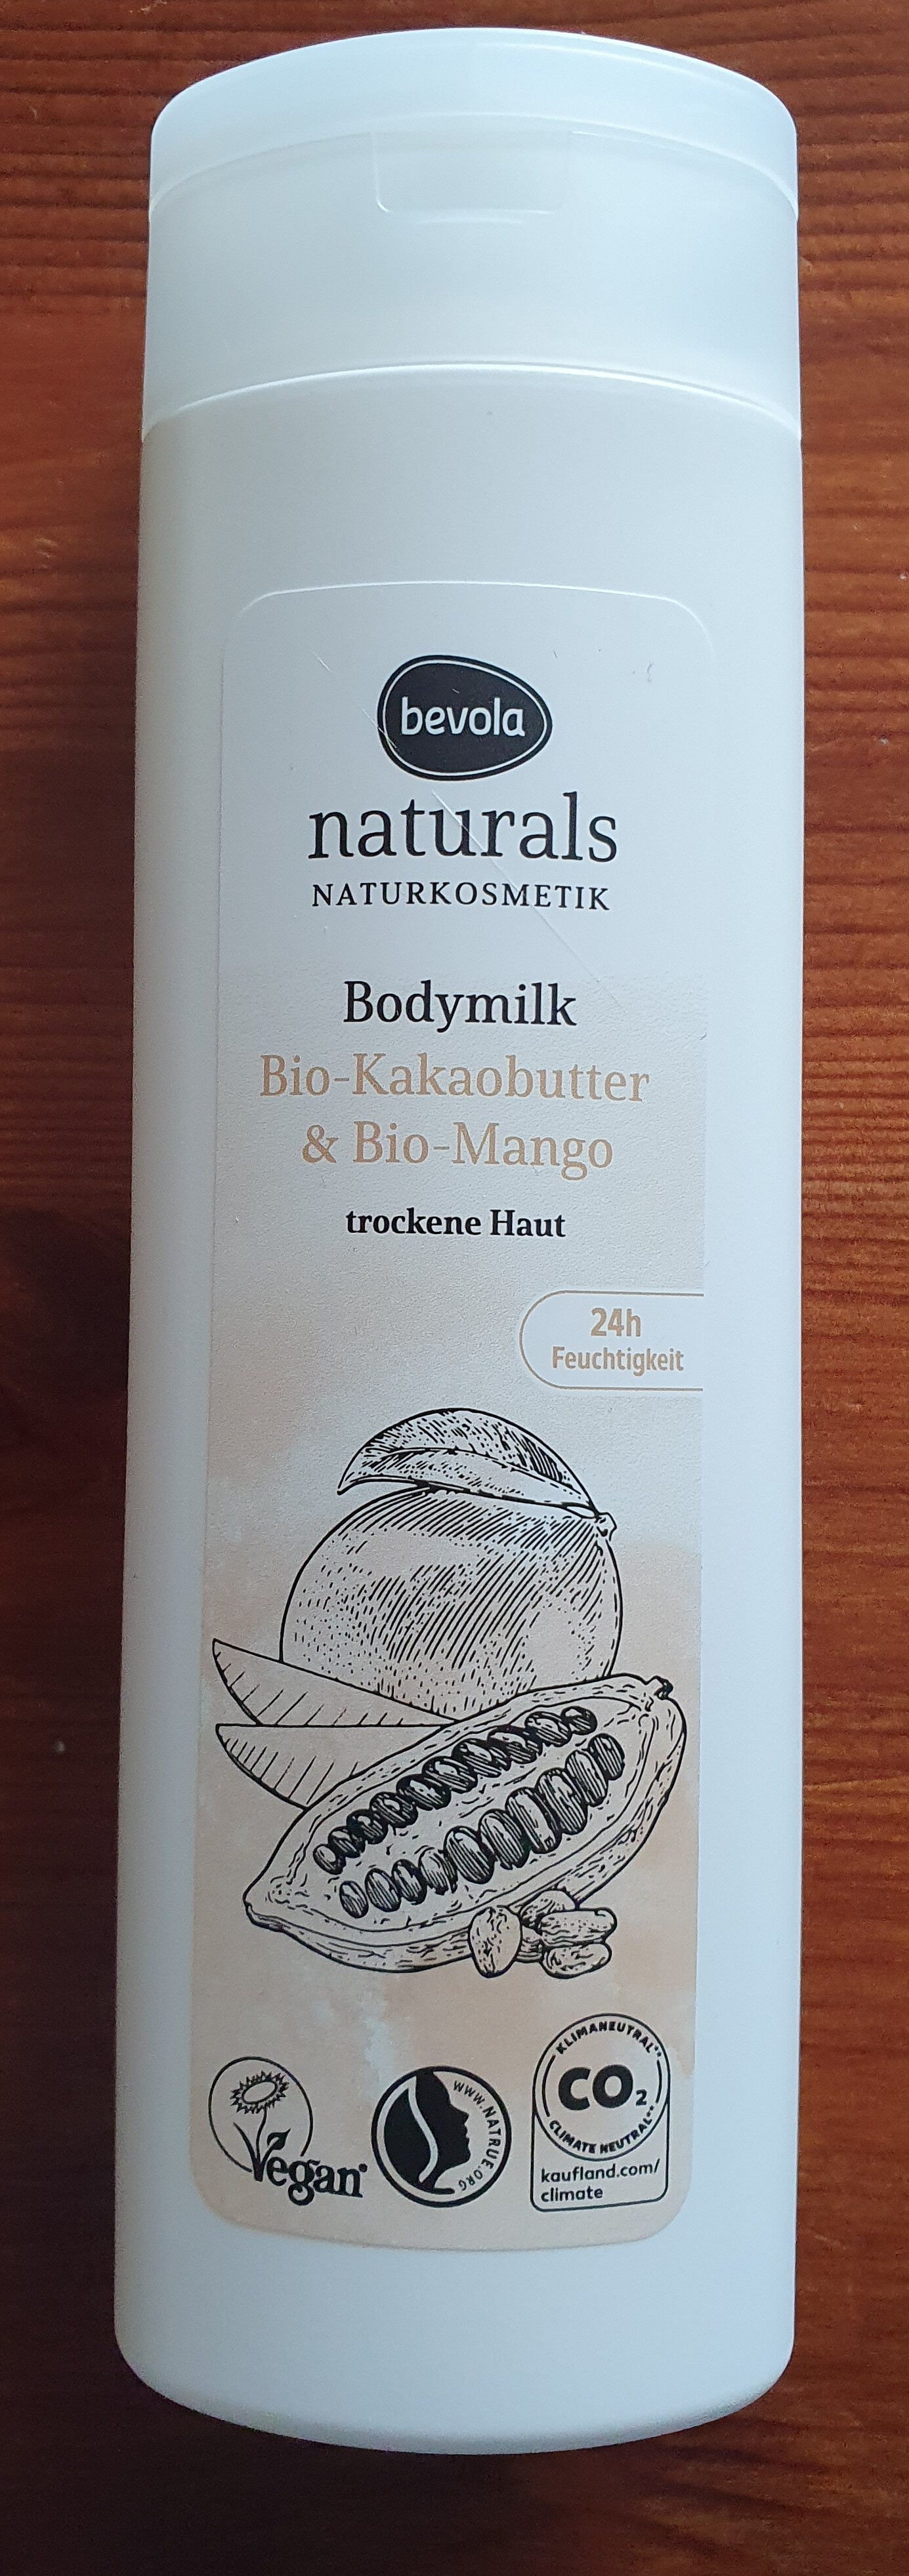 naturals Bodymilk - Produit - de